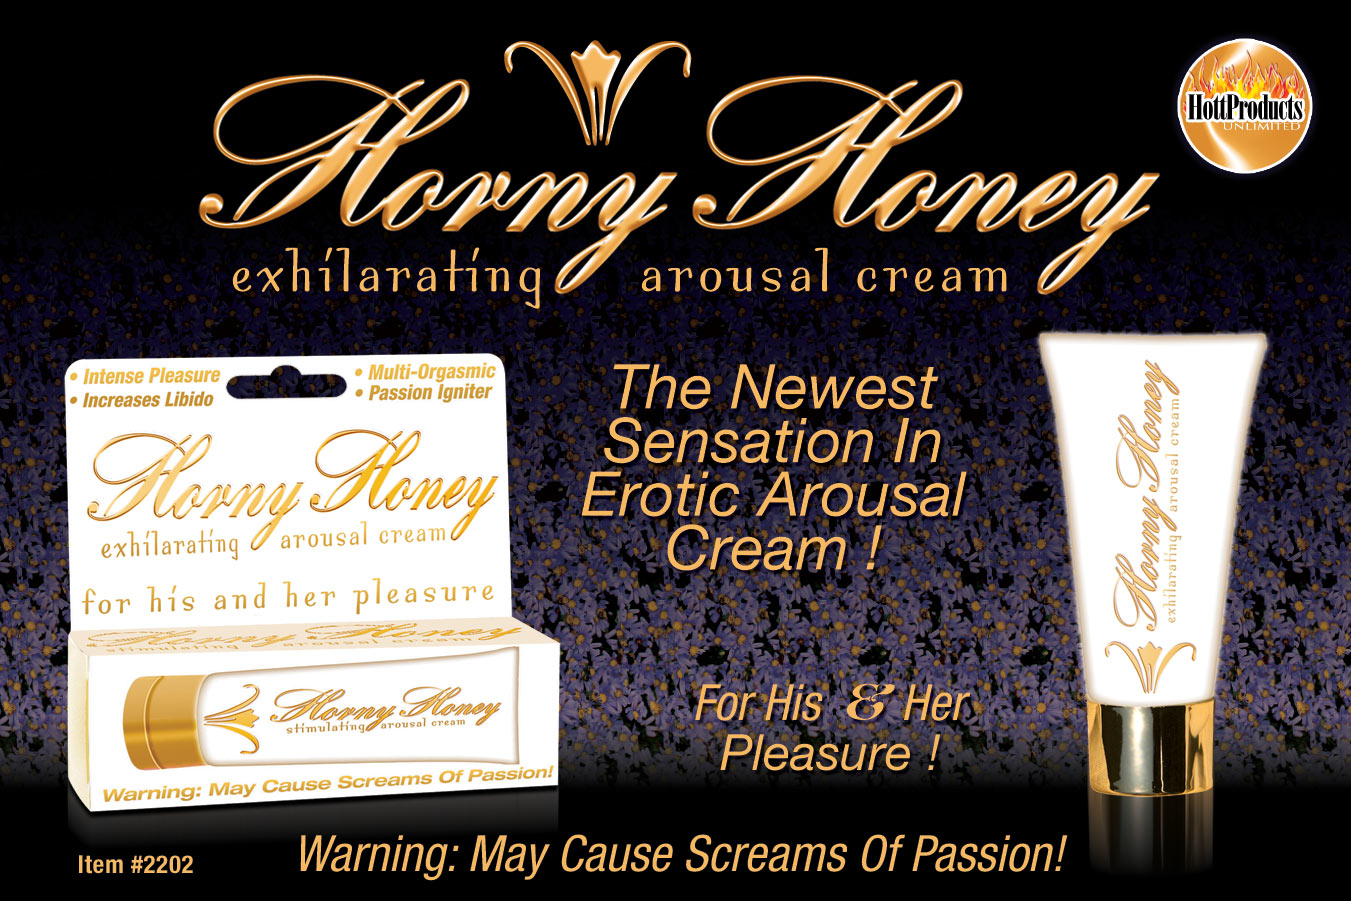 Horny Honey Stimulating Arousal Cream HOTT Products